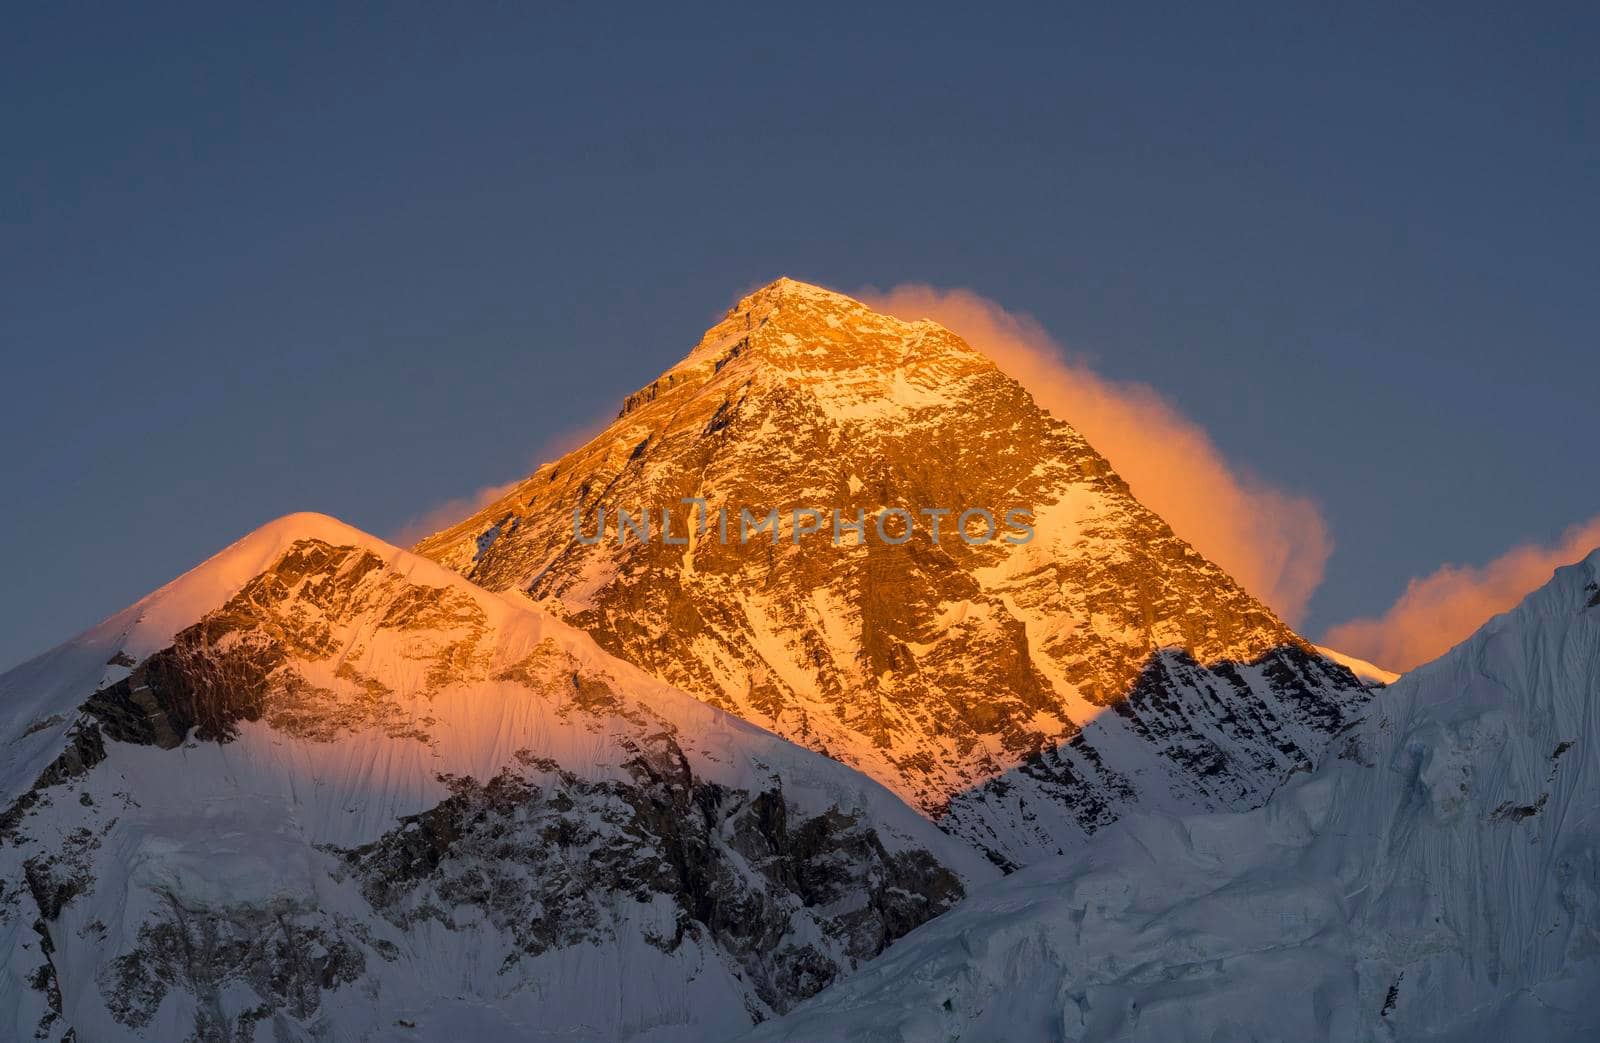 Everest summit or peak at sunset or sunrise by Arsgera